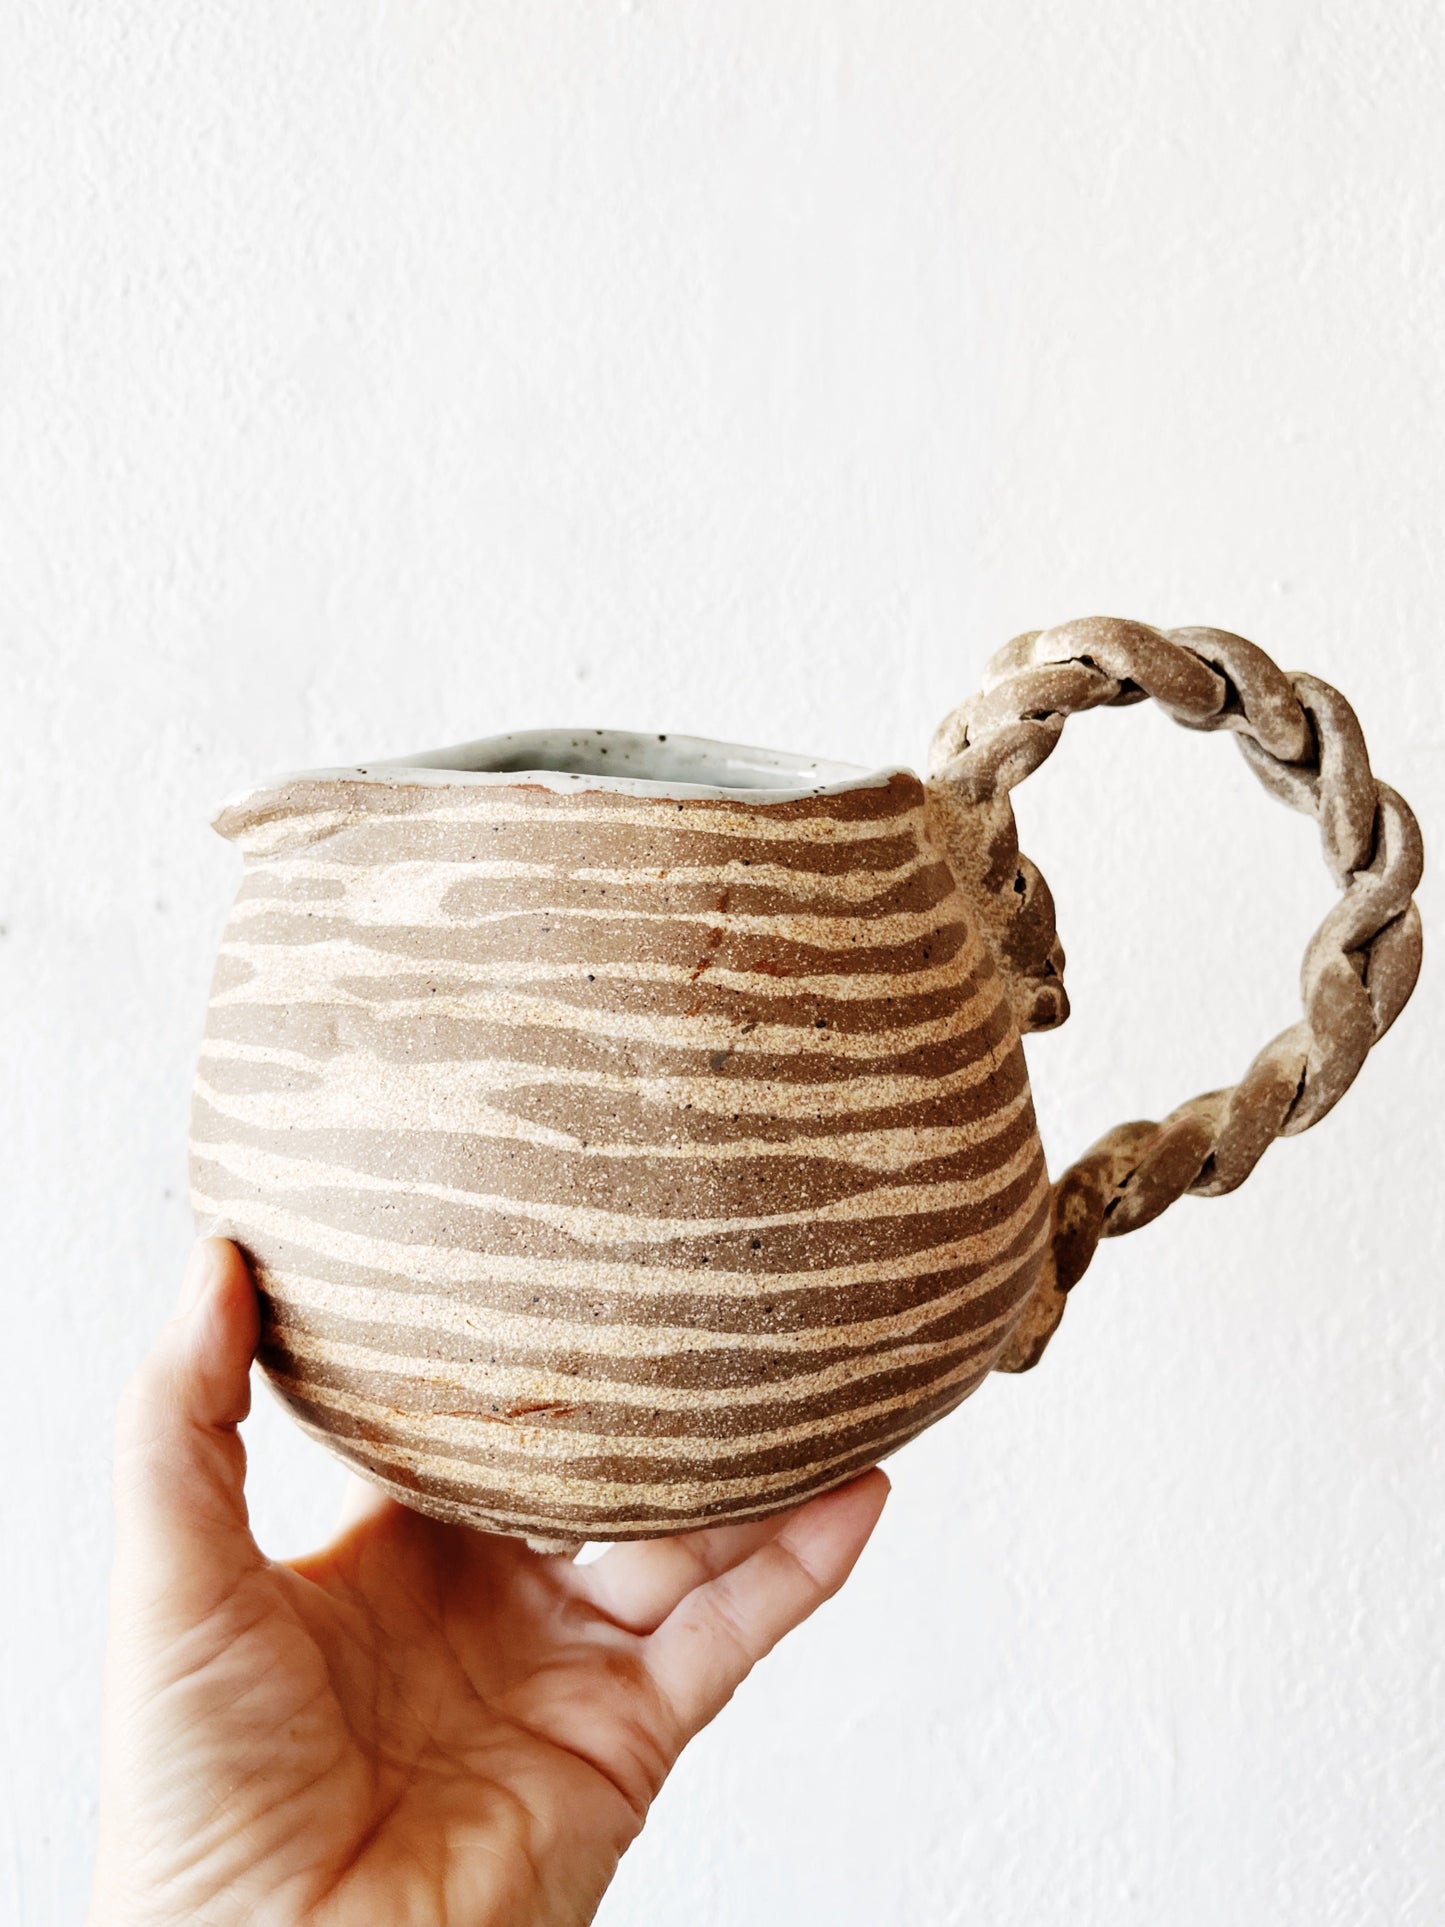 Handmade Ceramic Pitcher